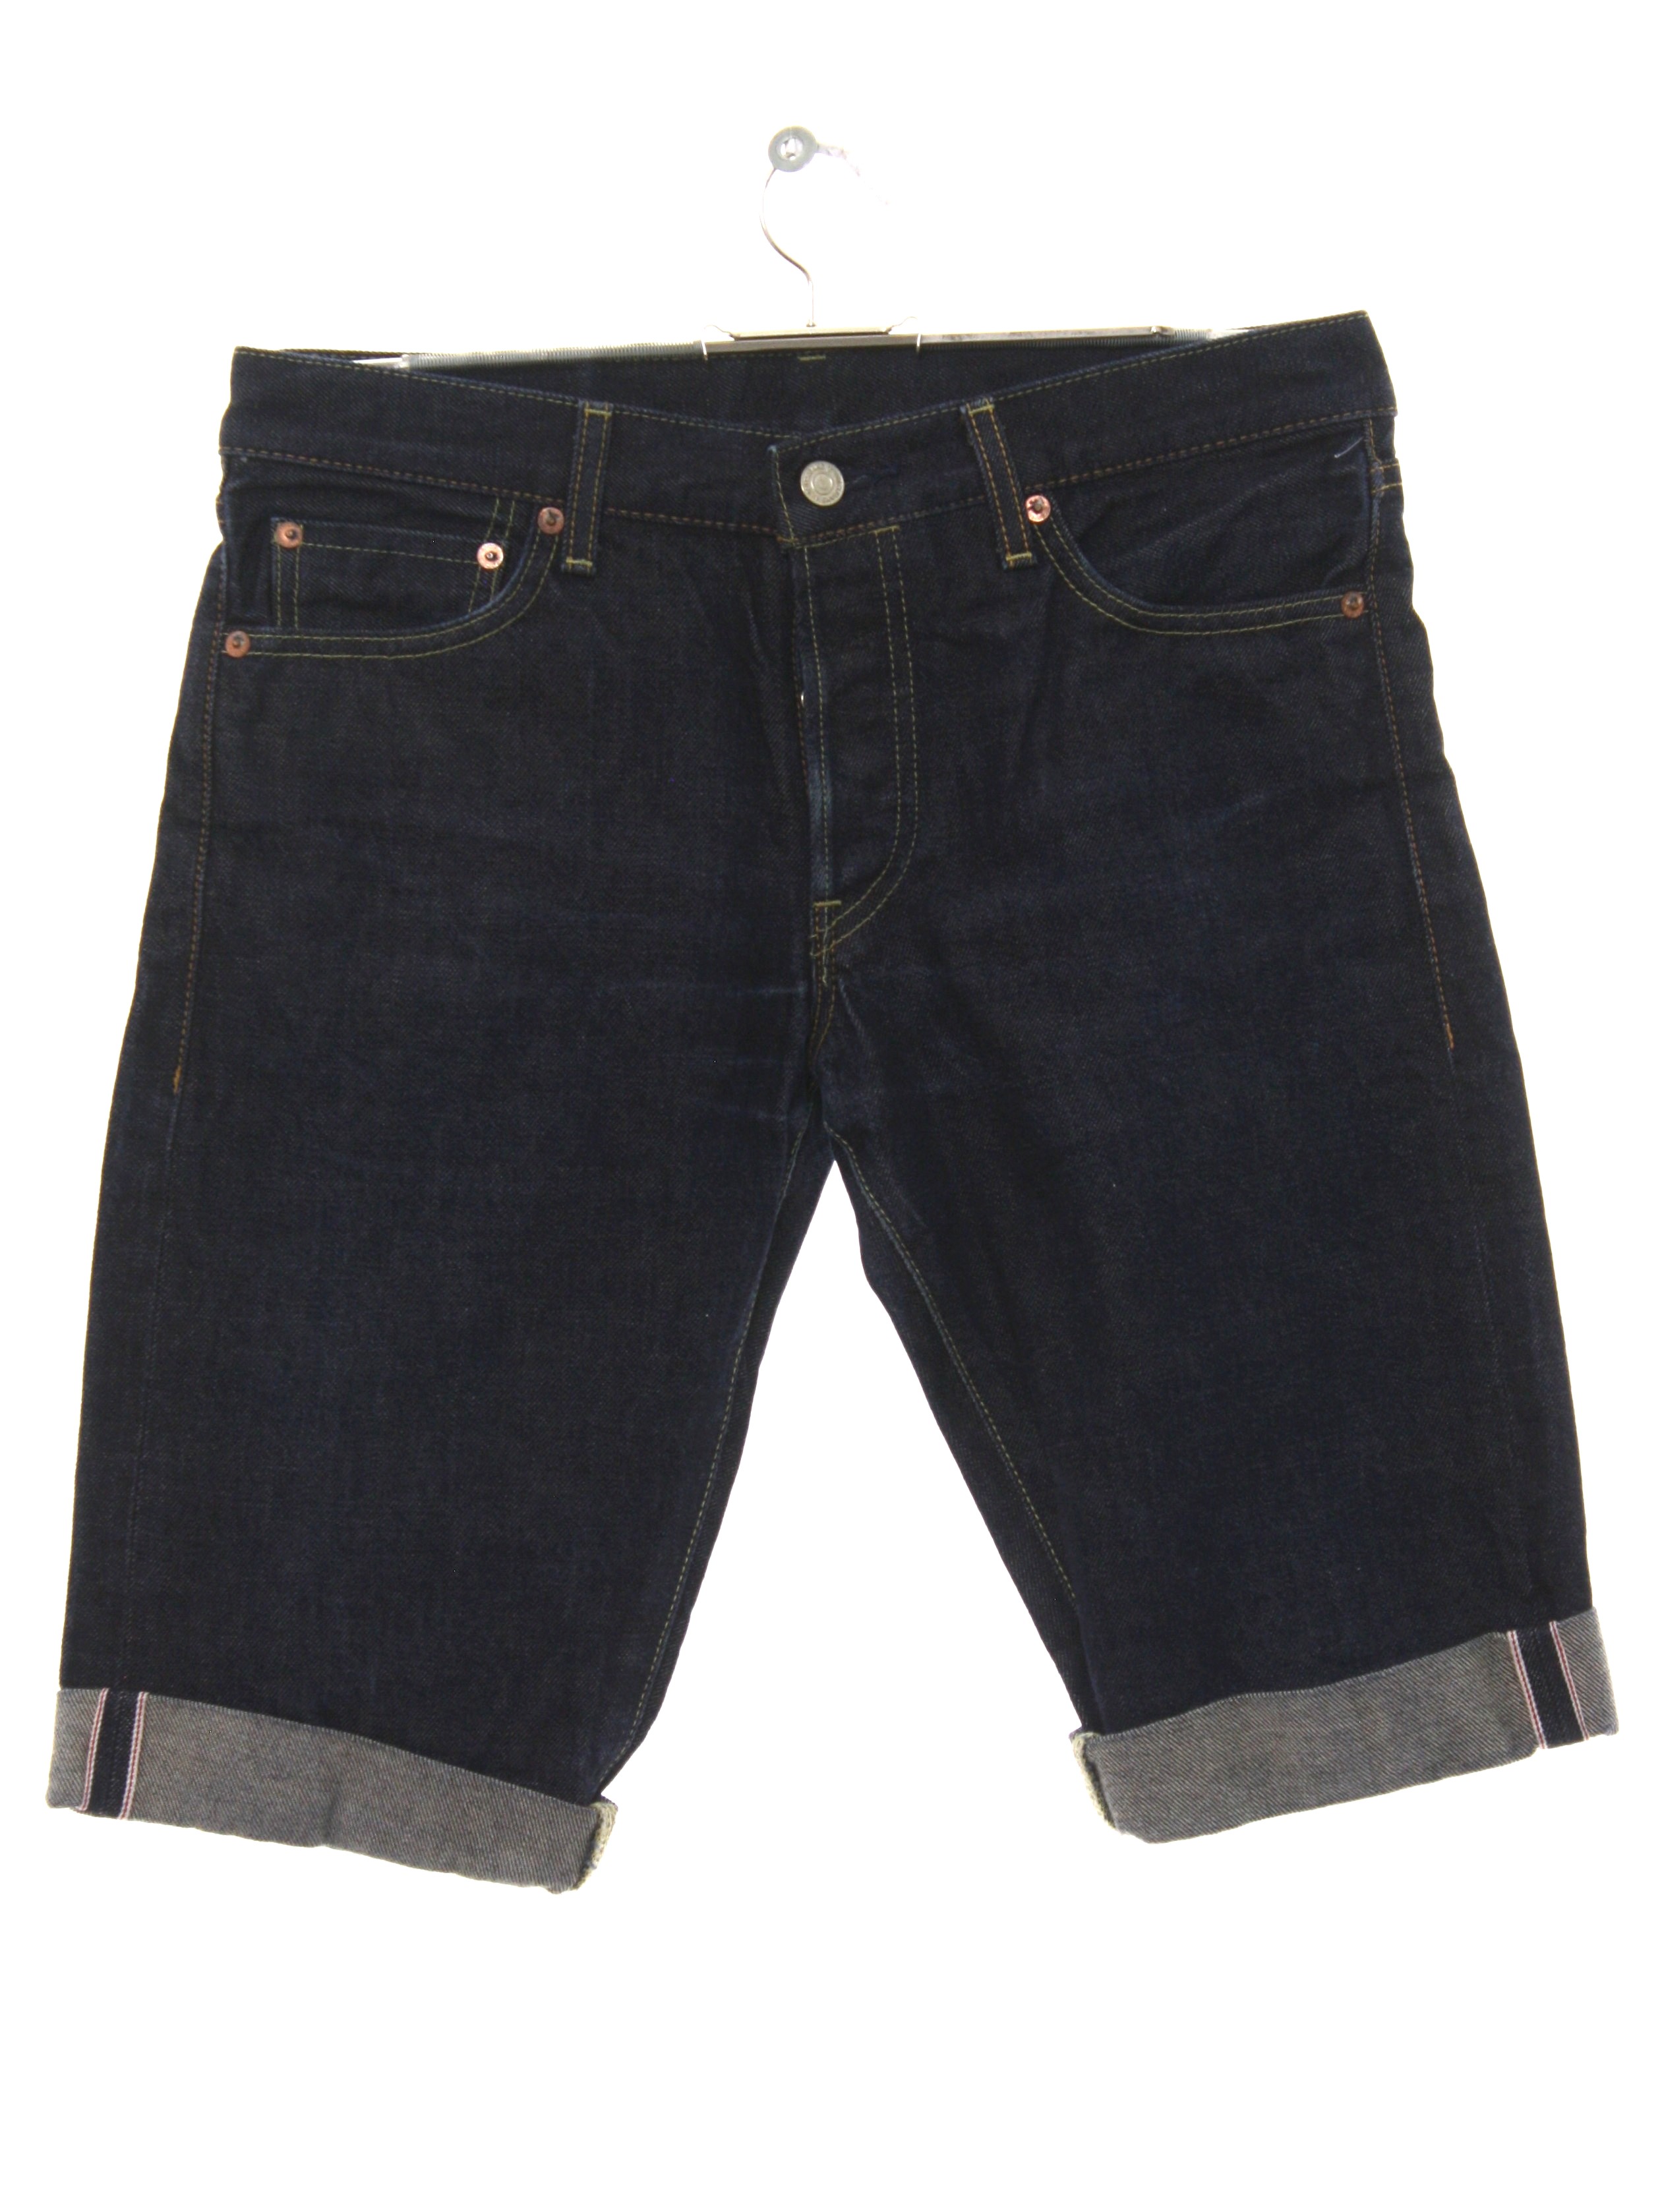 Vintage 90s Shorts: 90s -Union Jeans- Mens as-new dark blue cotton ...